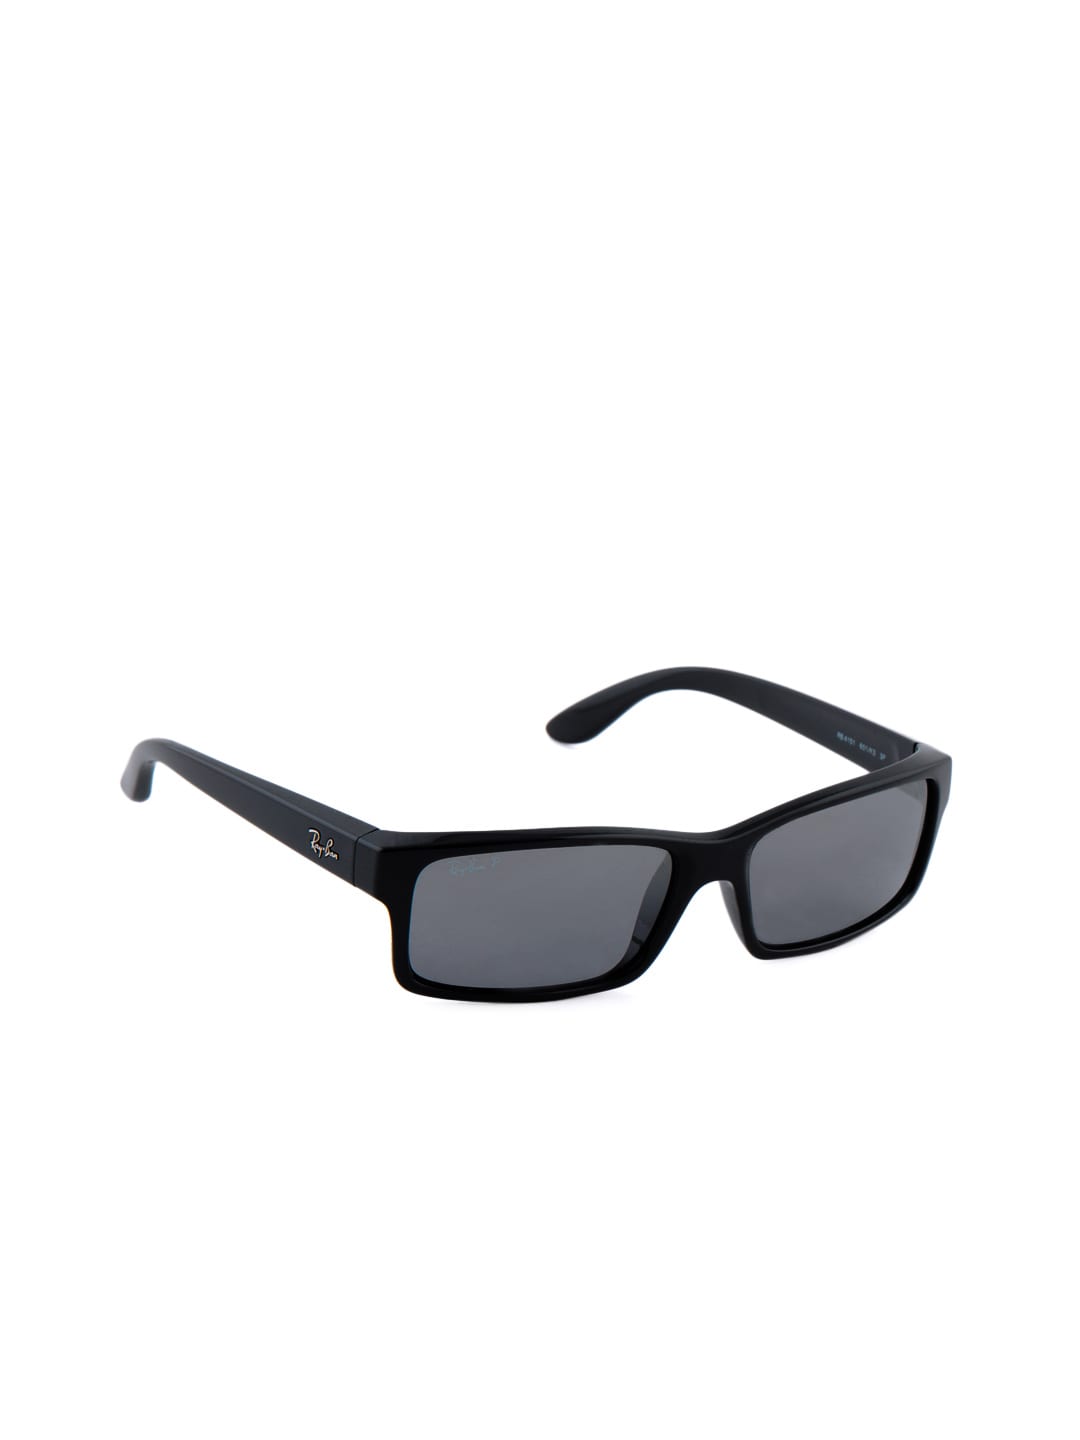 Ray-Ban Unisex Active Lifestyle Sunglasses